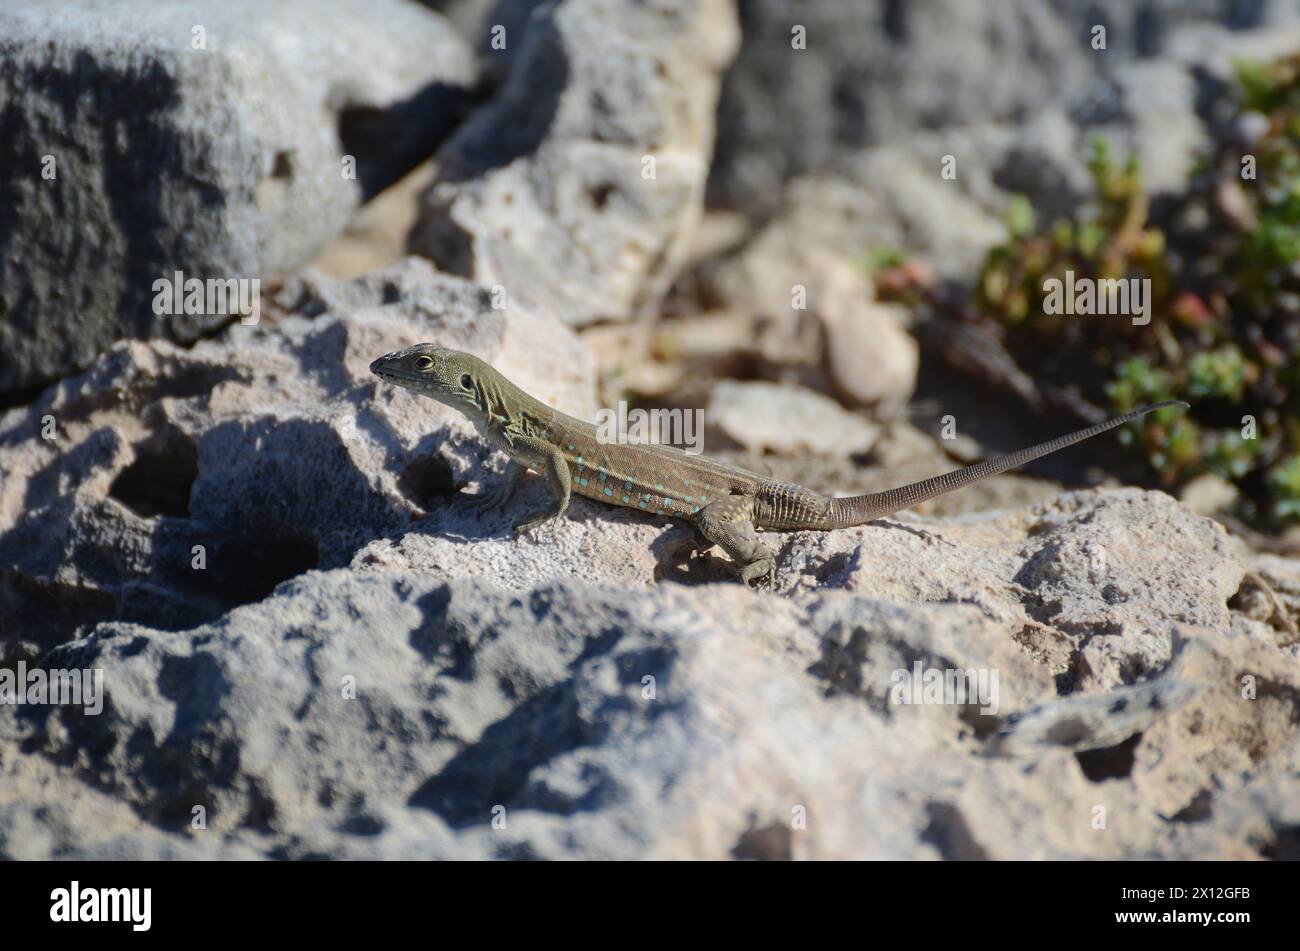 A lizard is on a rock Stock Photo